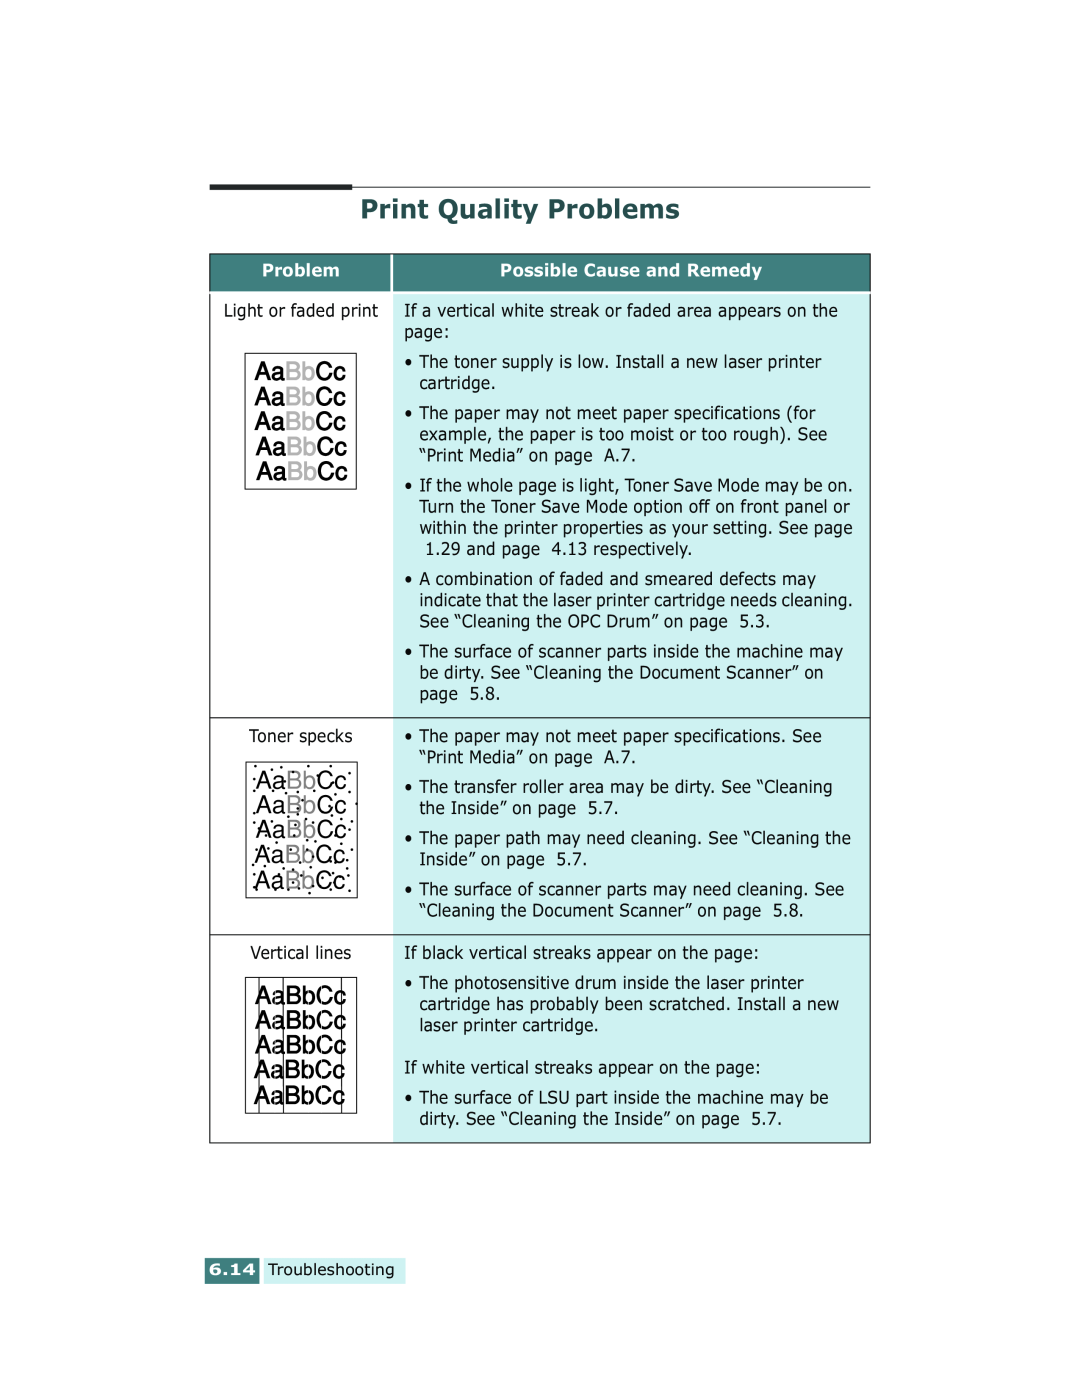 Xerox Pro 580 manual Print Quality Problems, AaBbCc 